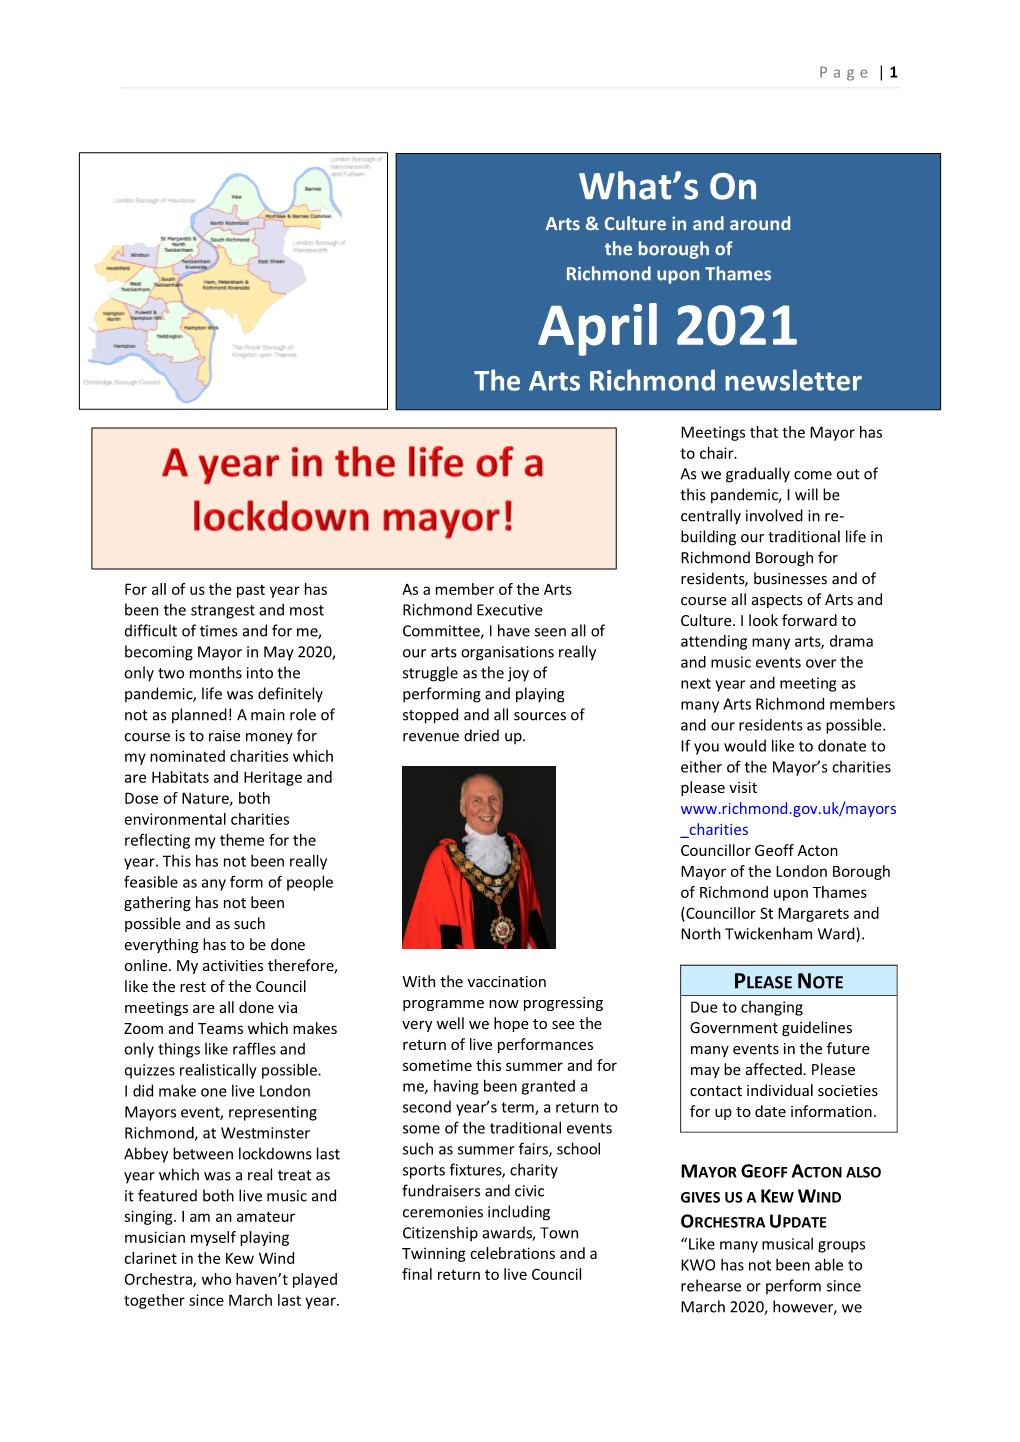 April 2021 the Arts Richmond Newsletter